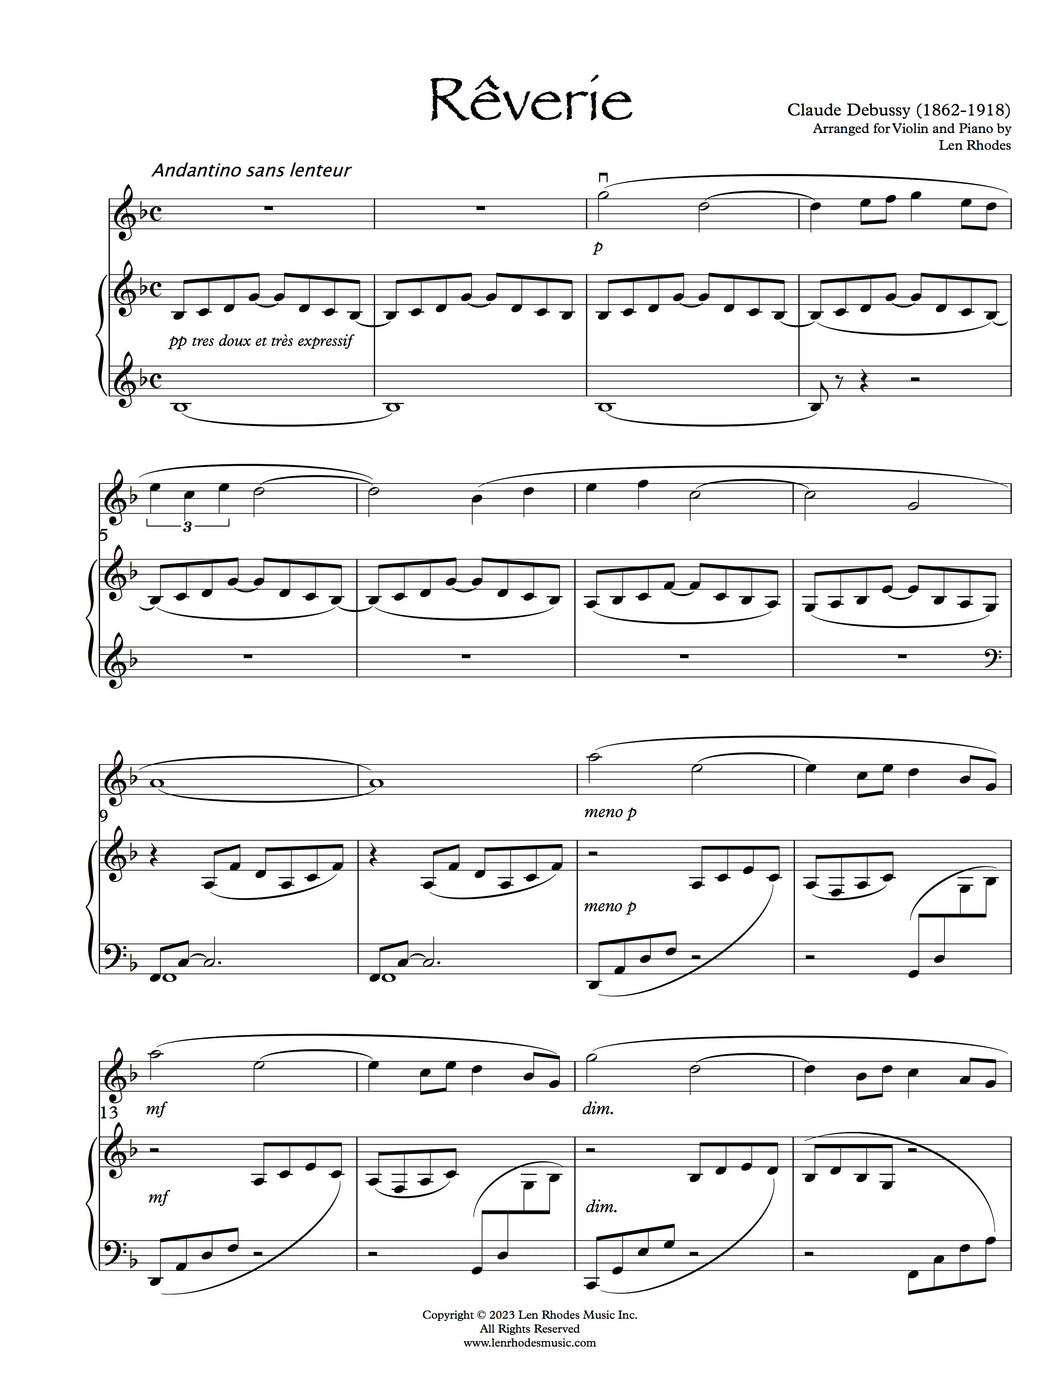 Rêverie, Debussy - Violin and Piano